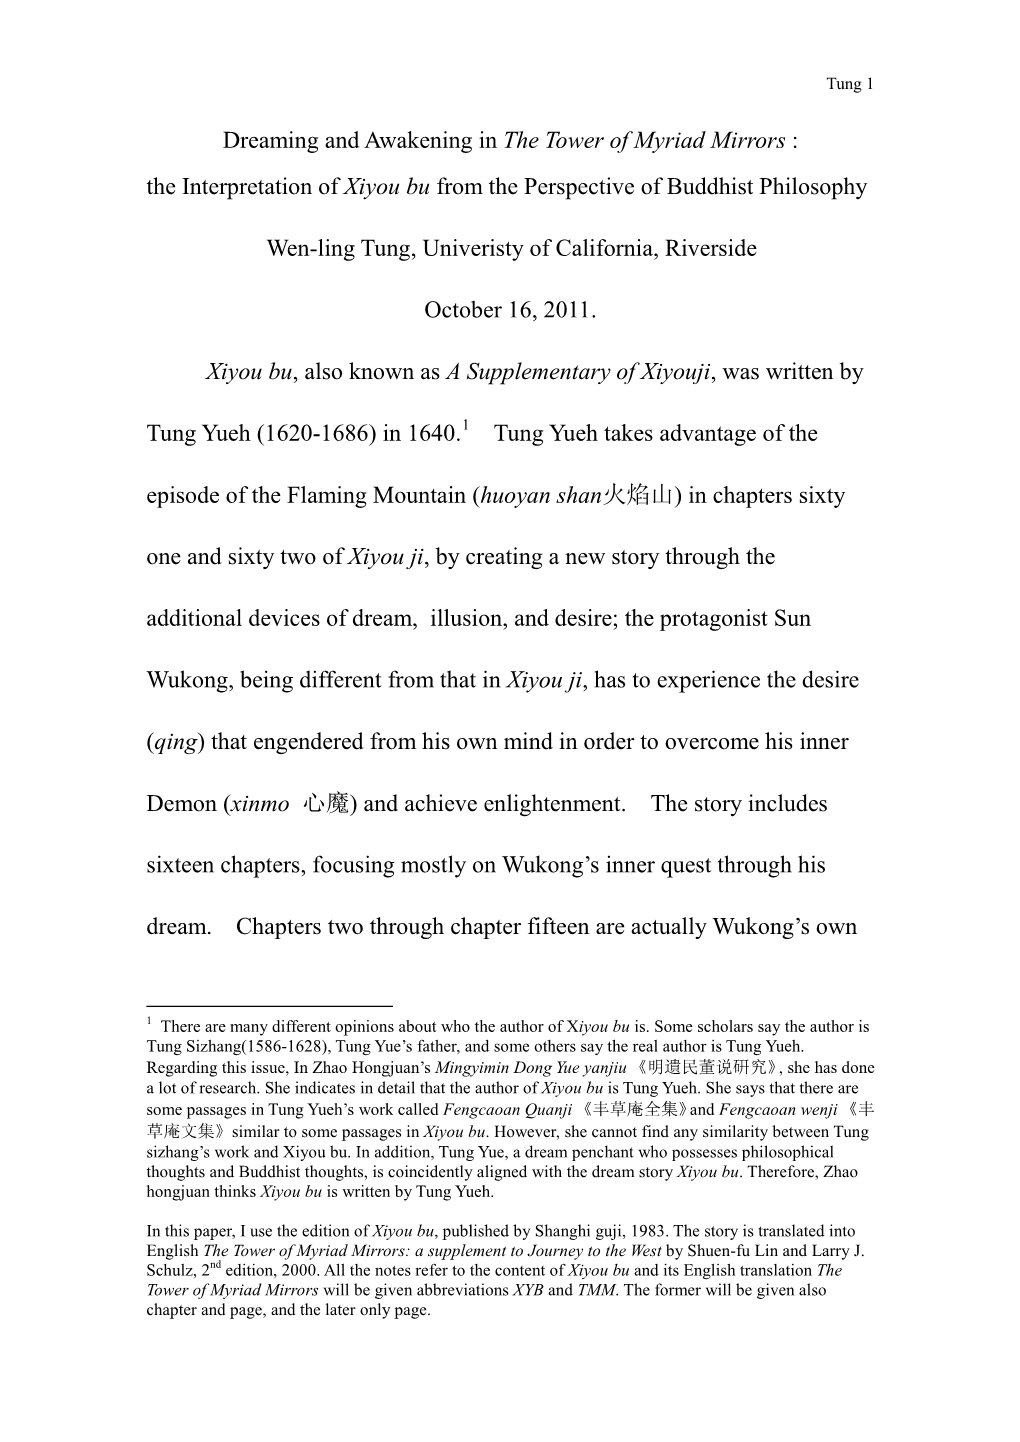 Wen-Ling Tung, Univeristy of California, Riverside